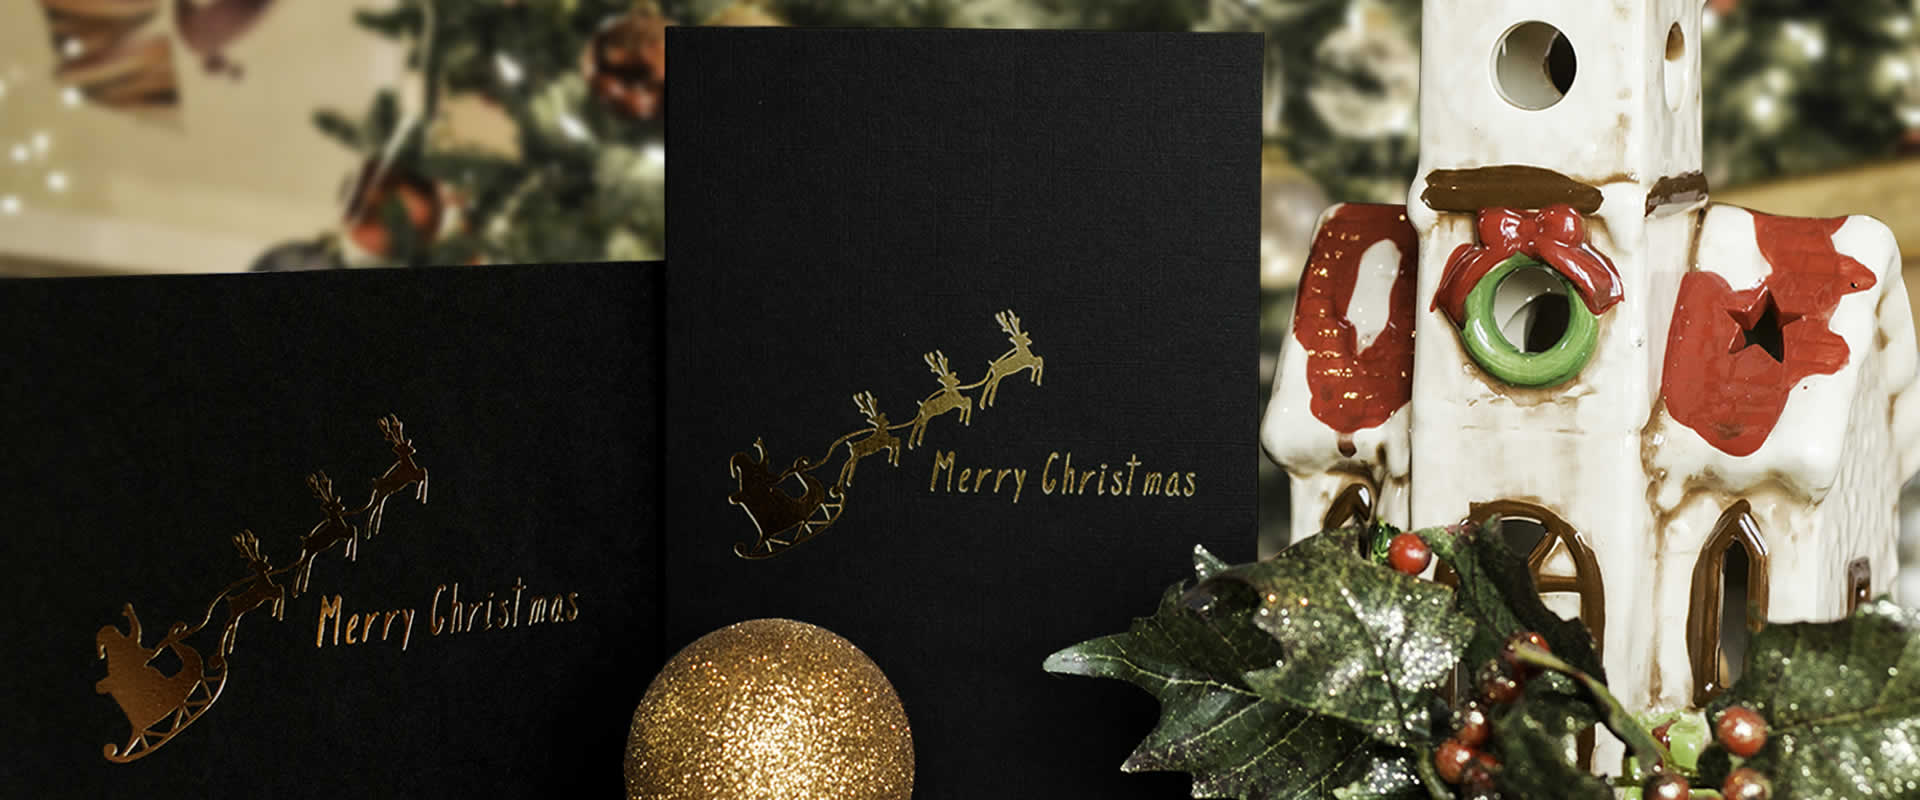 Black and White Christmas Photo Folders - Ideal for Santa's Grottos and Santa Photos